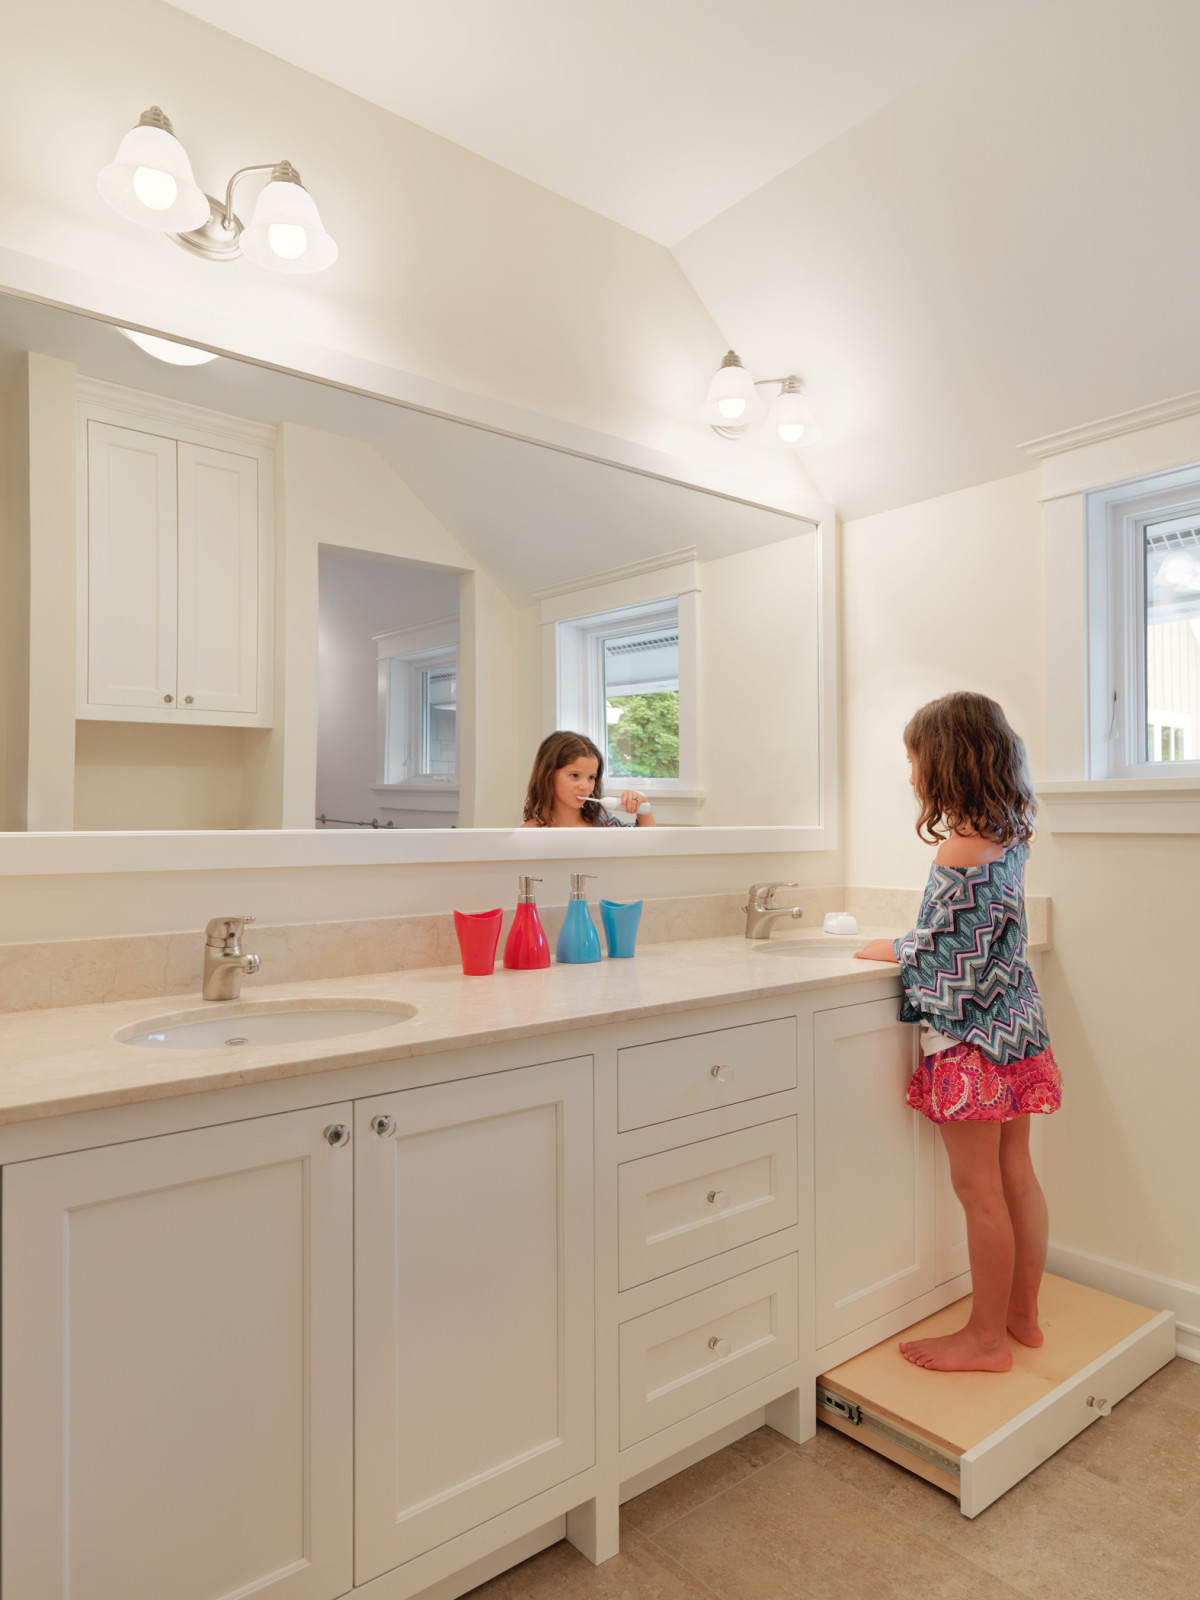 Kids Bathroom Step Stools
 A Custom Step Stool For a Kid s Bathroom Fine Homebuilding